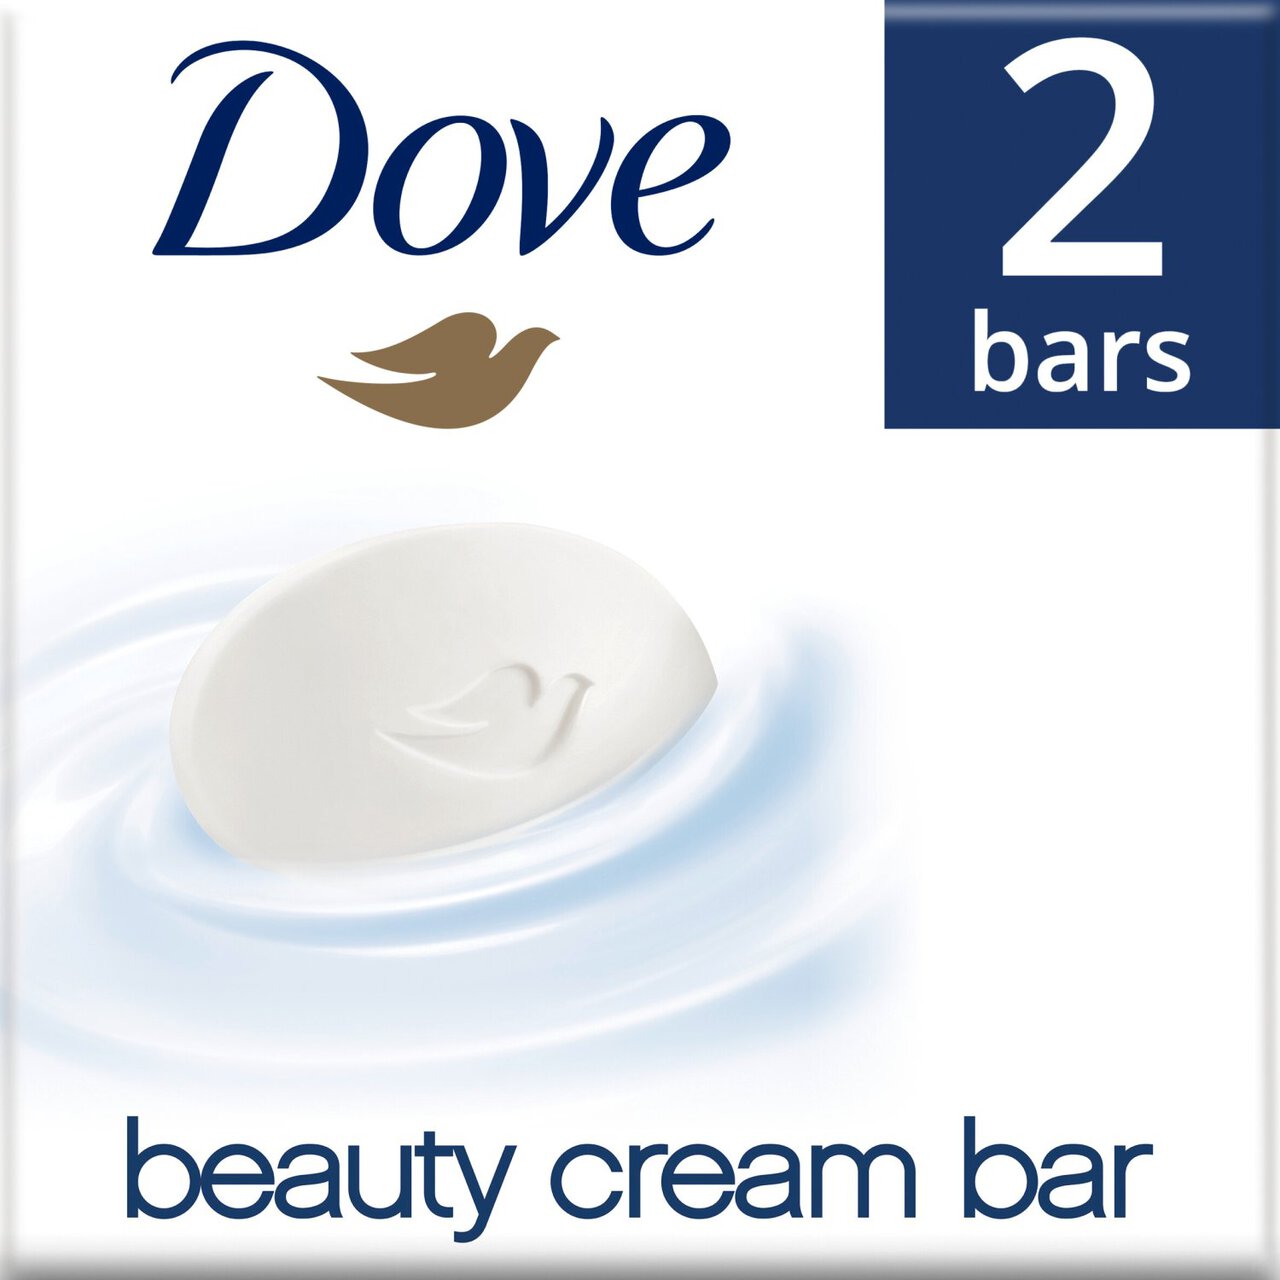 Dove Original Beauty Cream Bar 2 x 90g